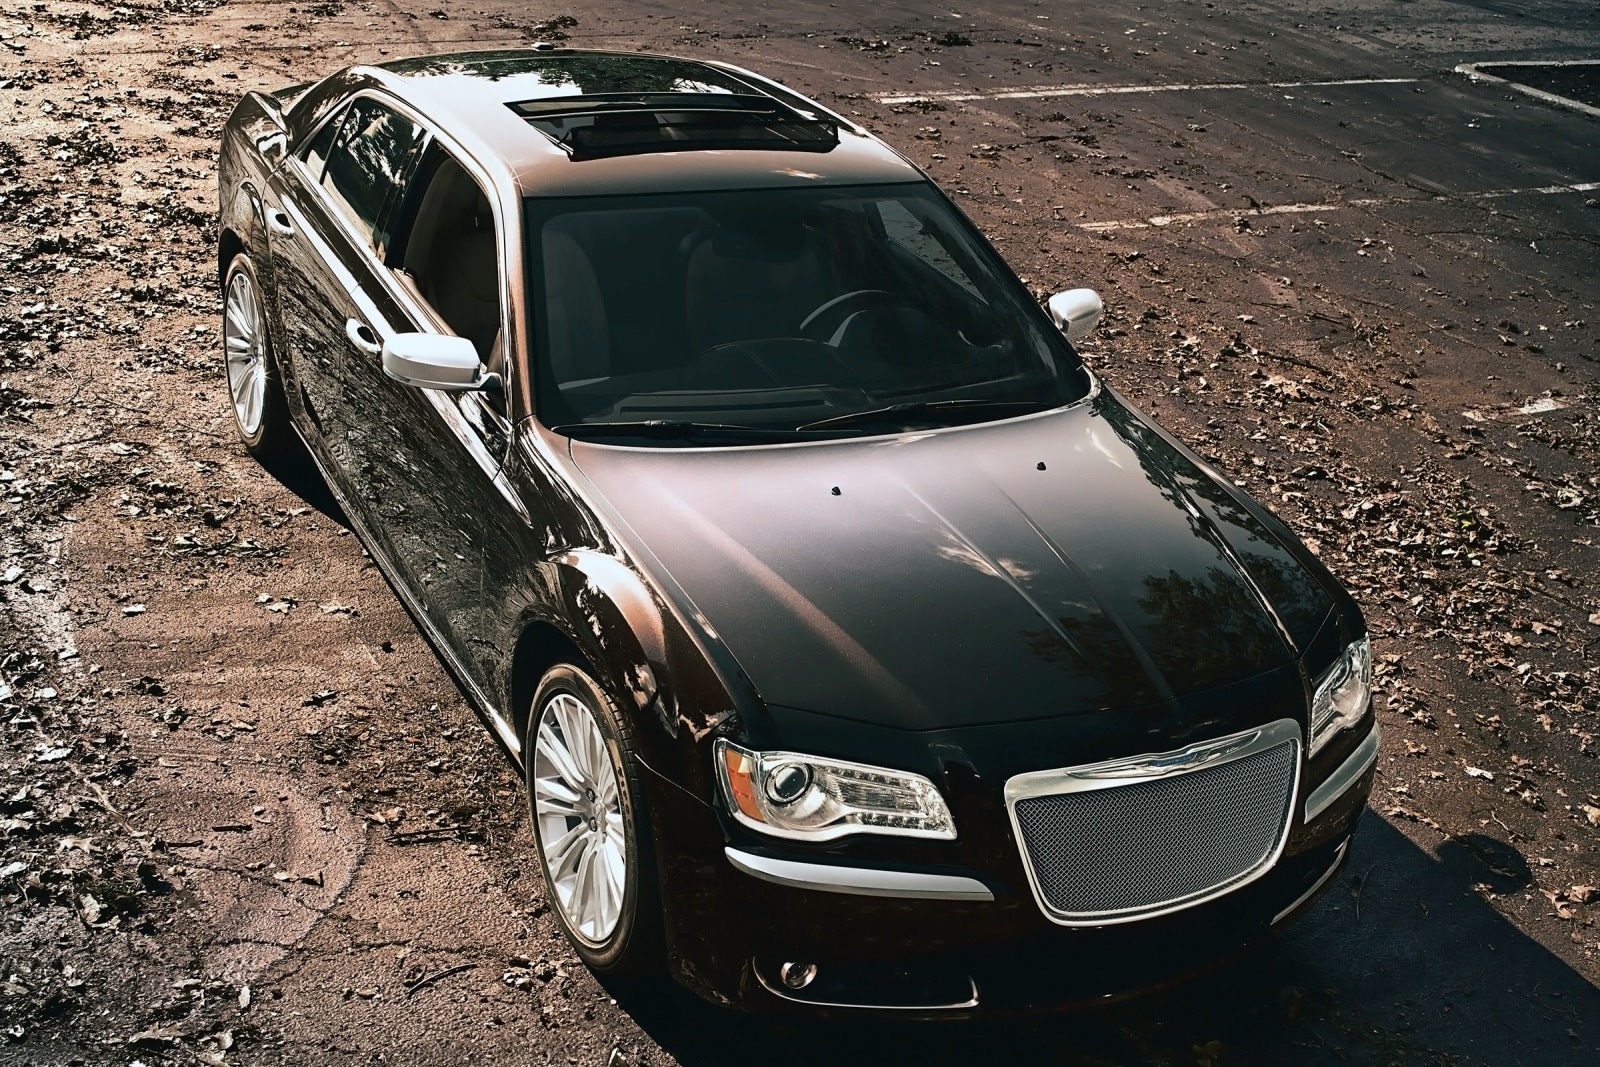 2012 Chrysler 300 Review & Ratings | Edmunds